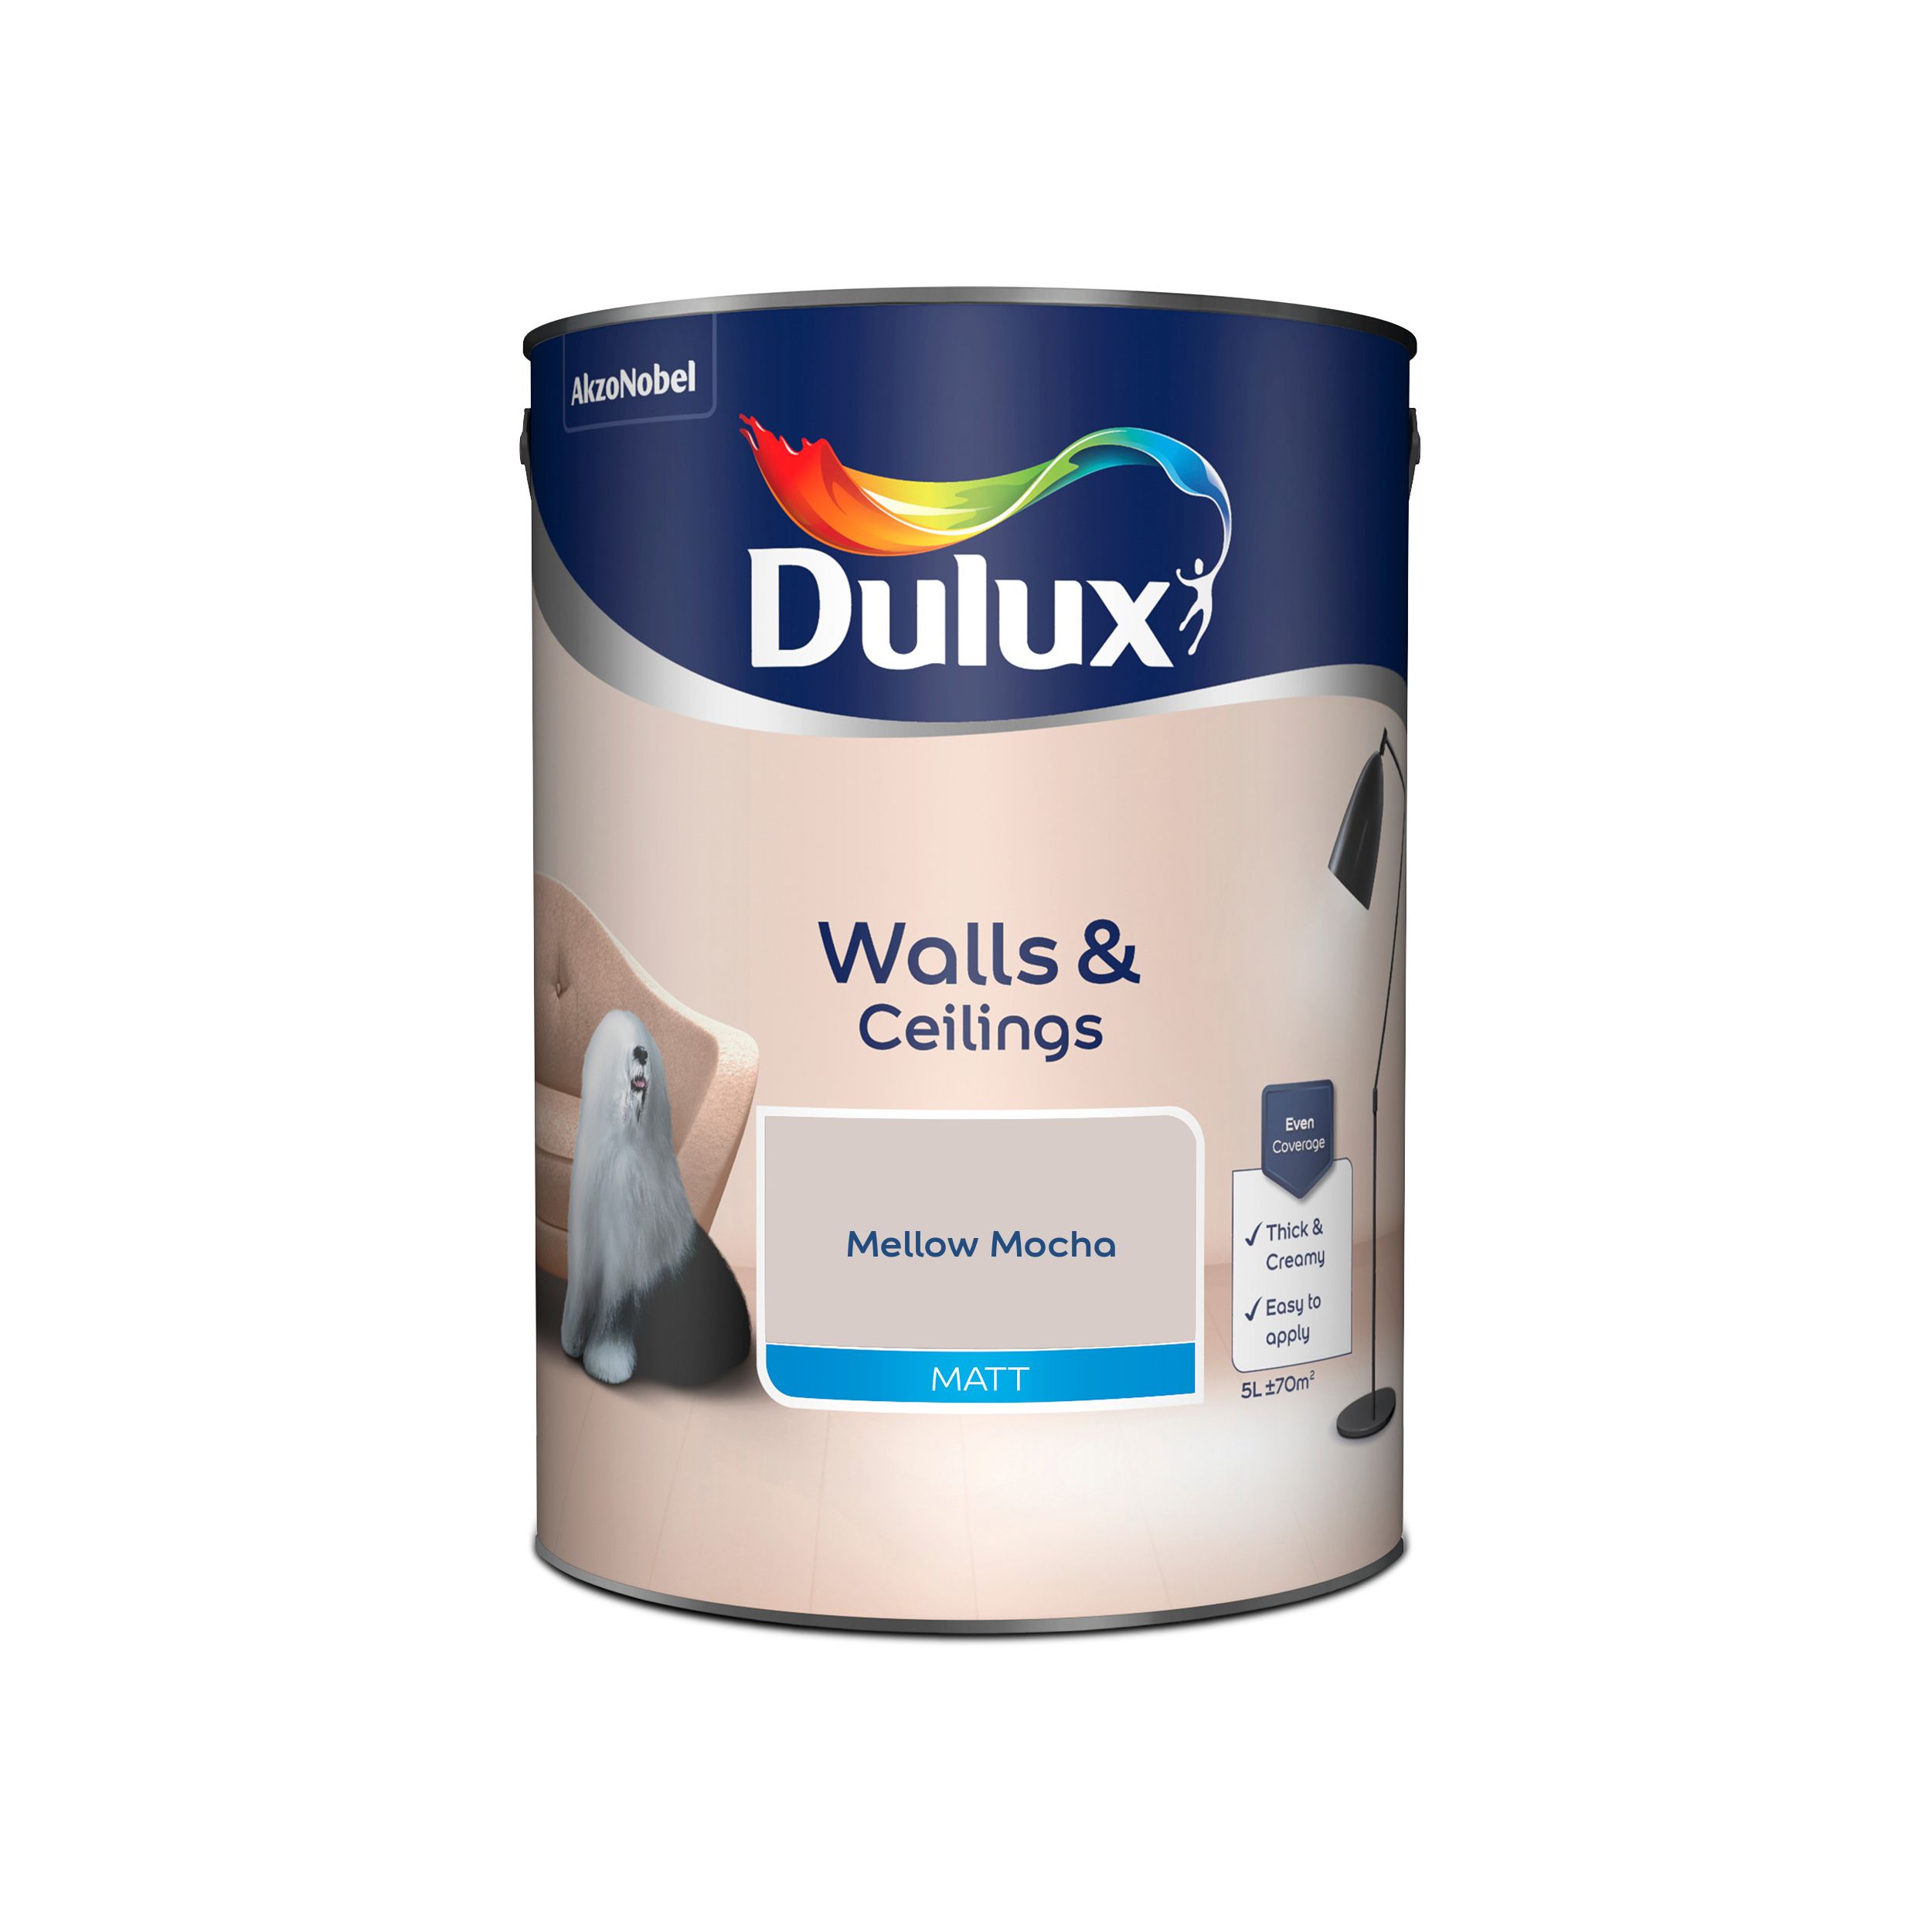 Dulux Walls & ceilings Mellow mocha Matt Emulsion paint, 5L